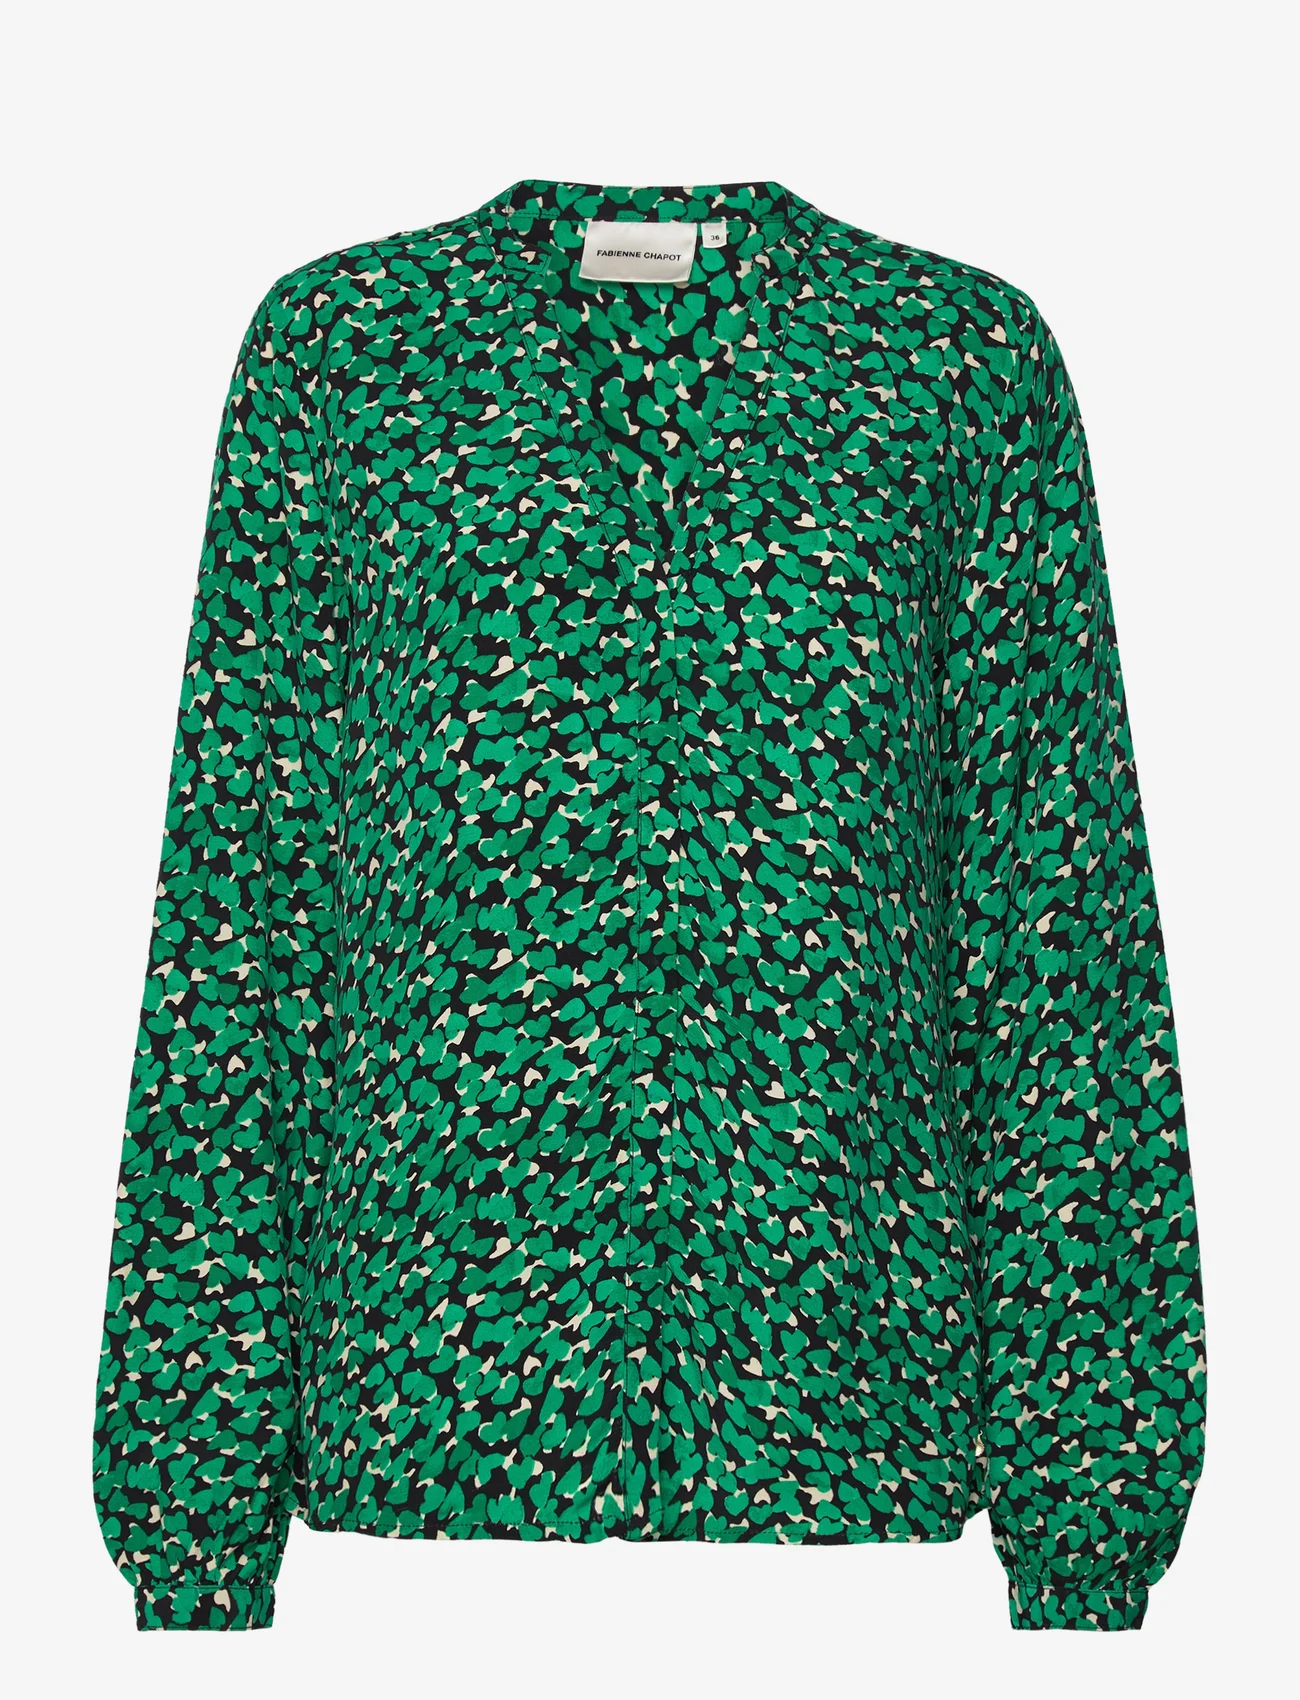 Fabienne Chapot - Frida Blouse - long-sleeved blouses - feeling green/black - 0